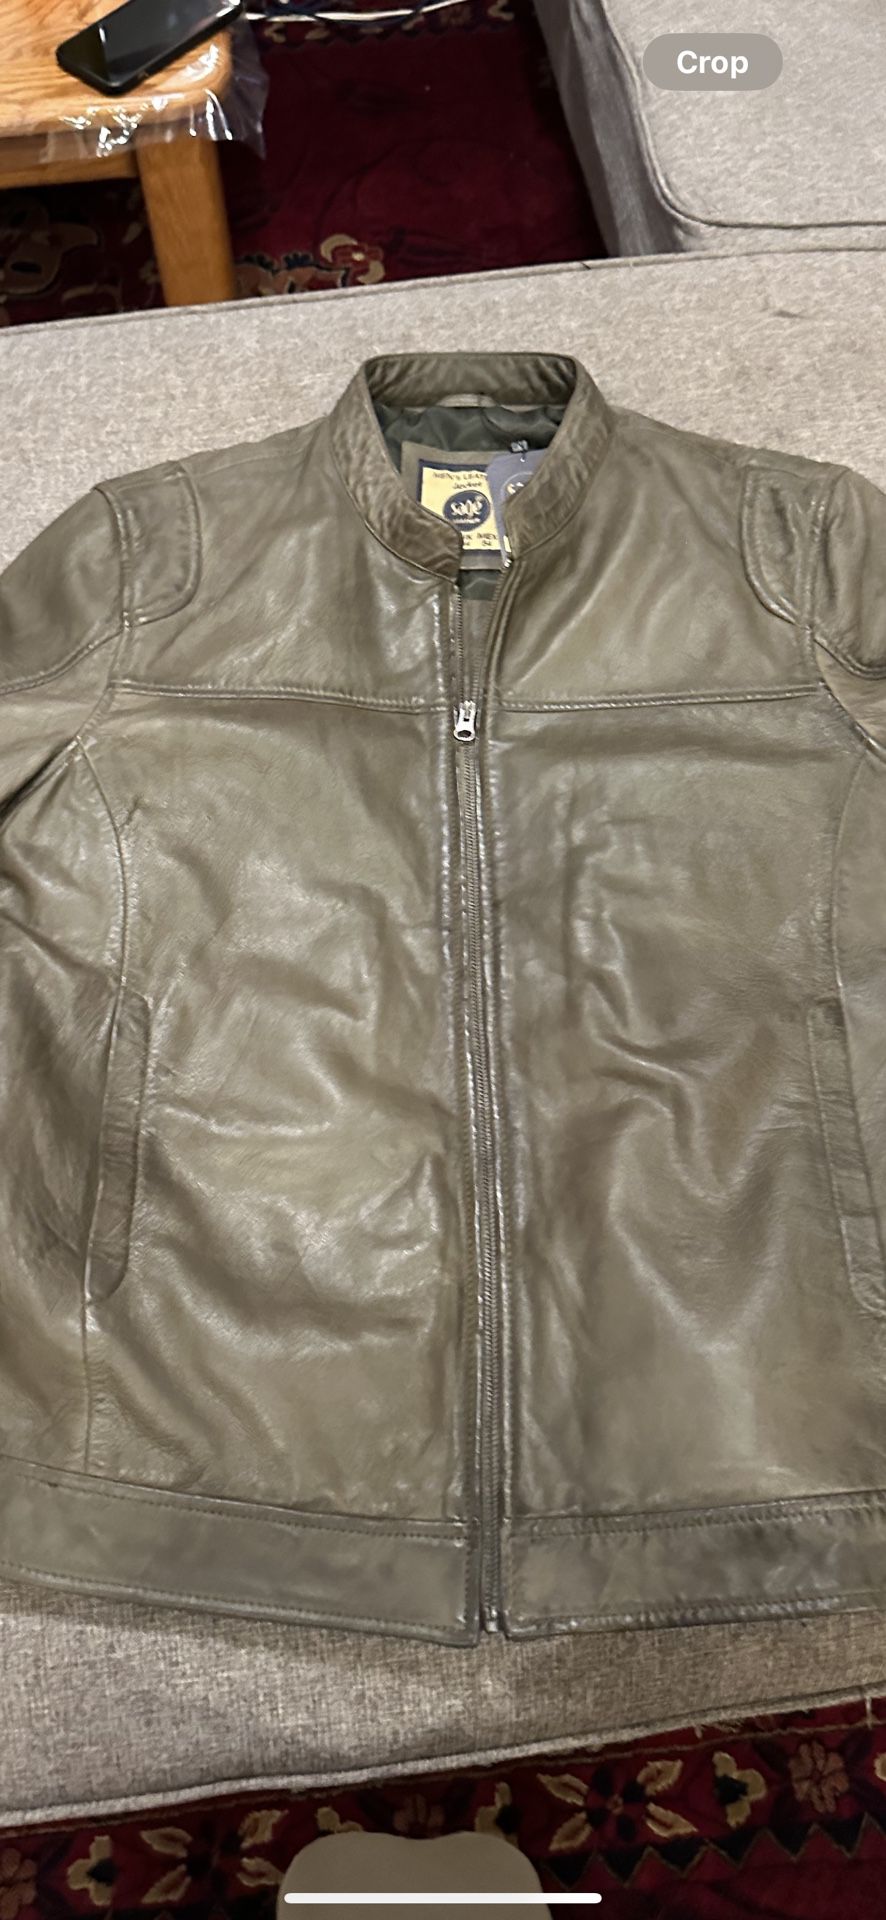 Genuine Leather Jacket-XL